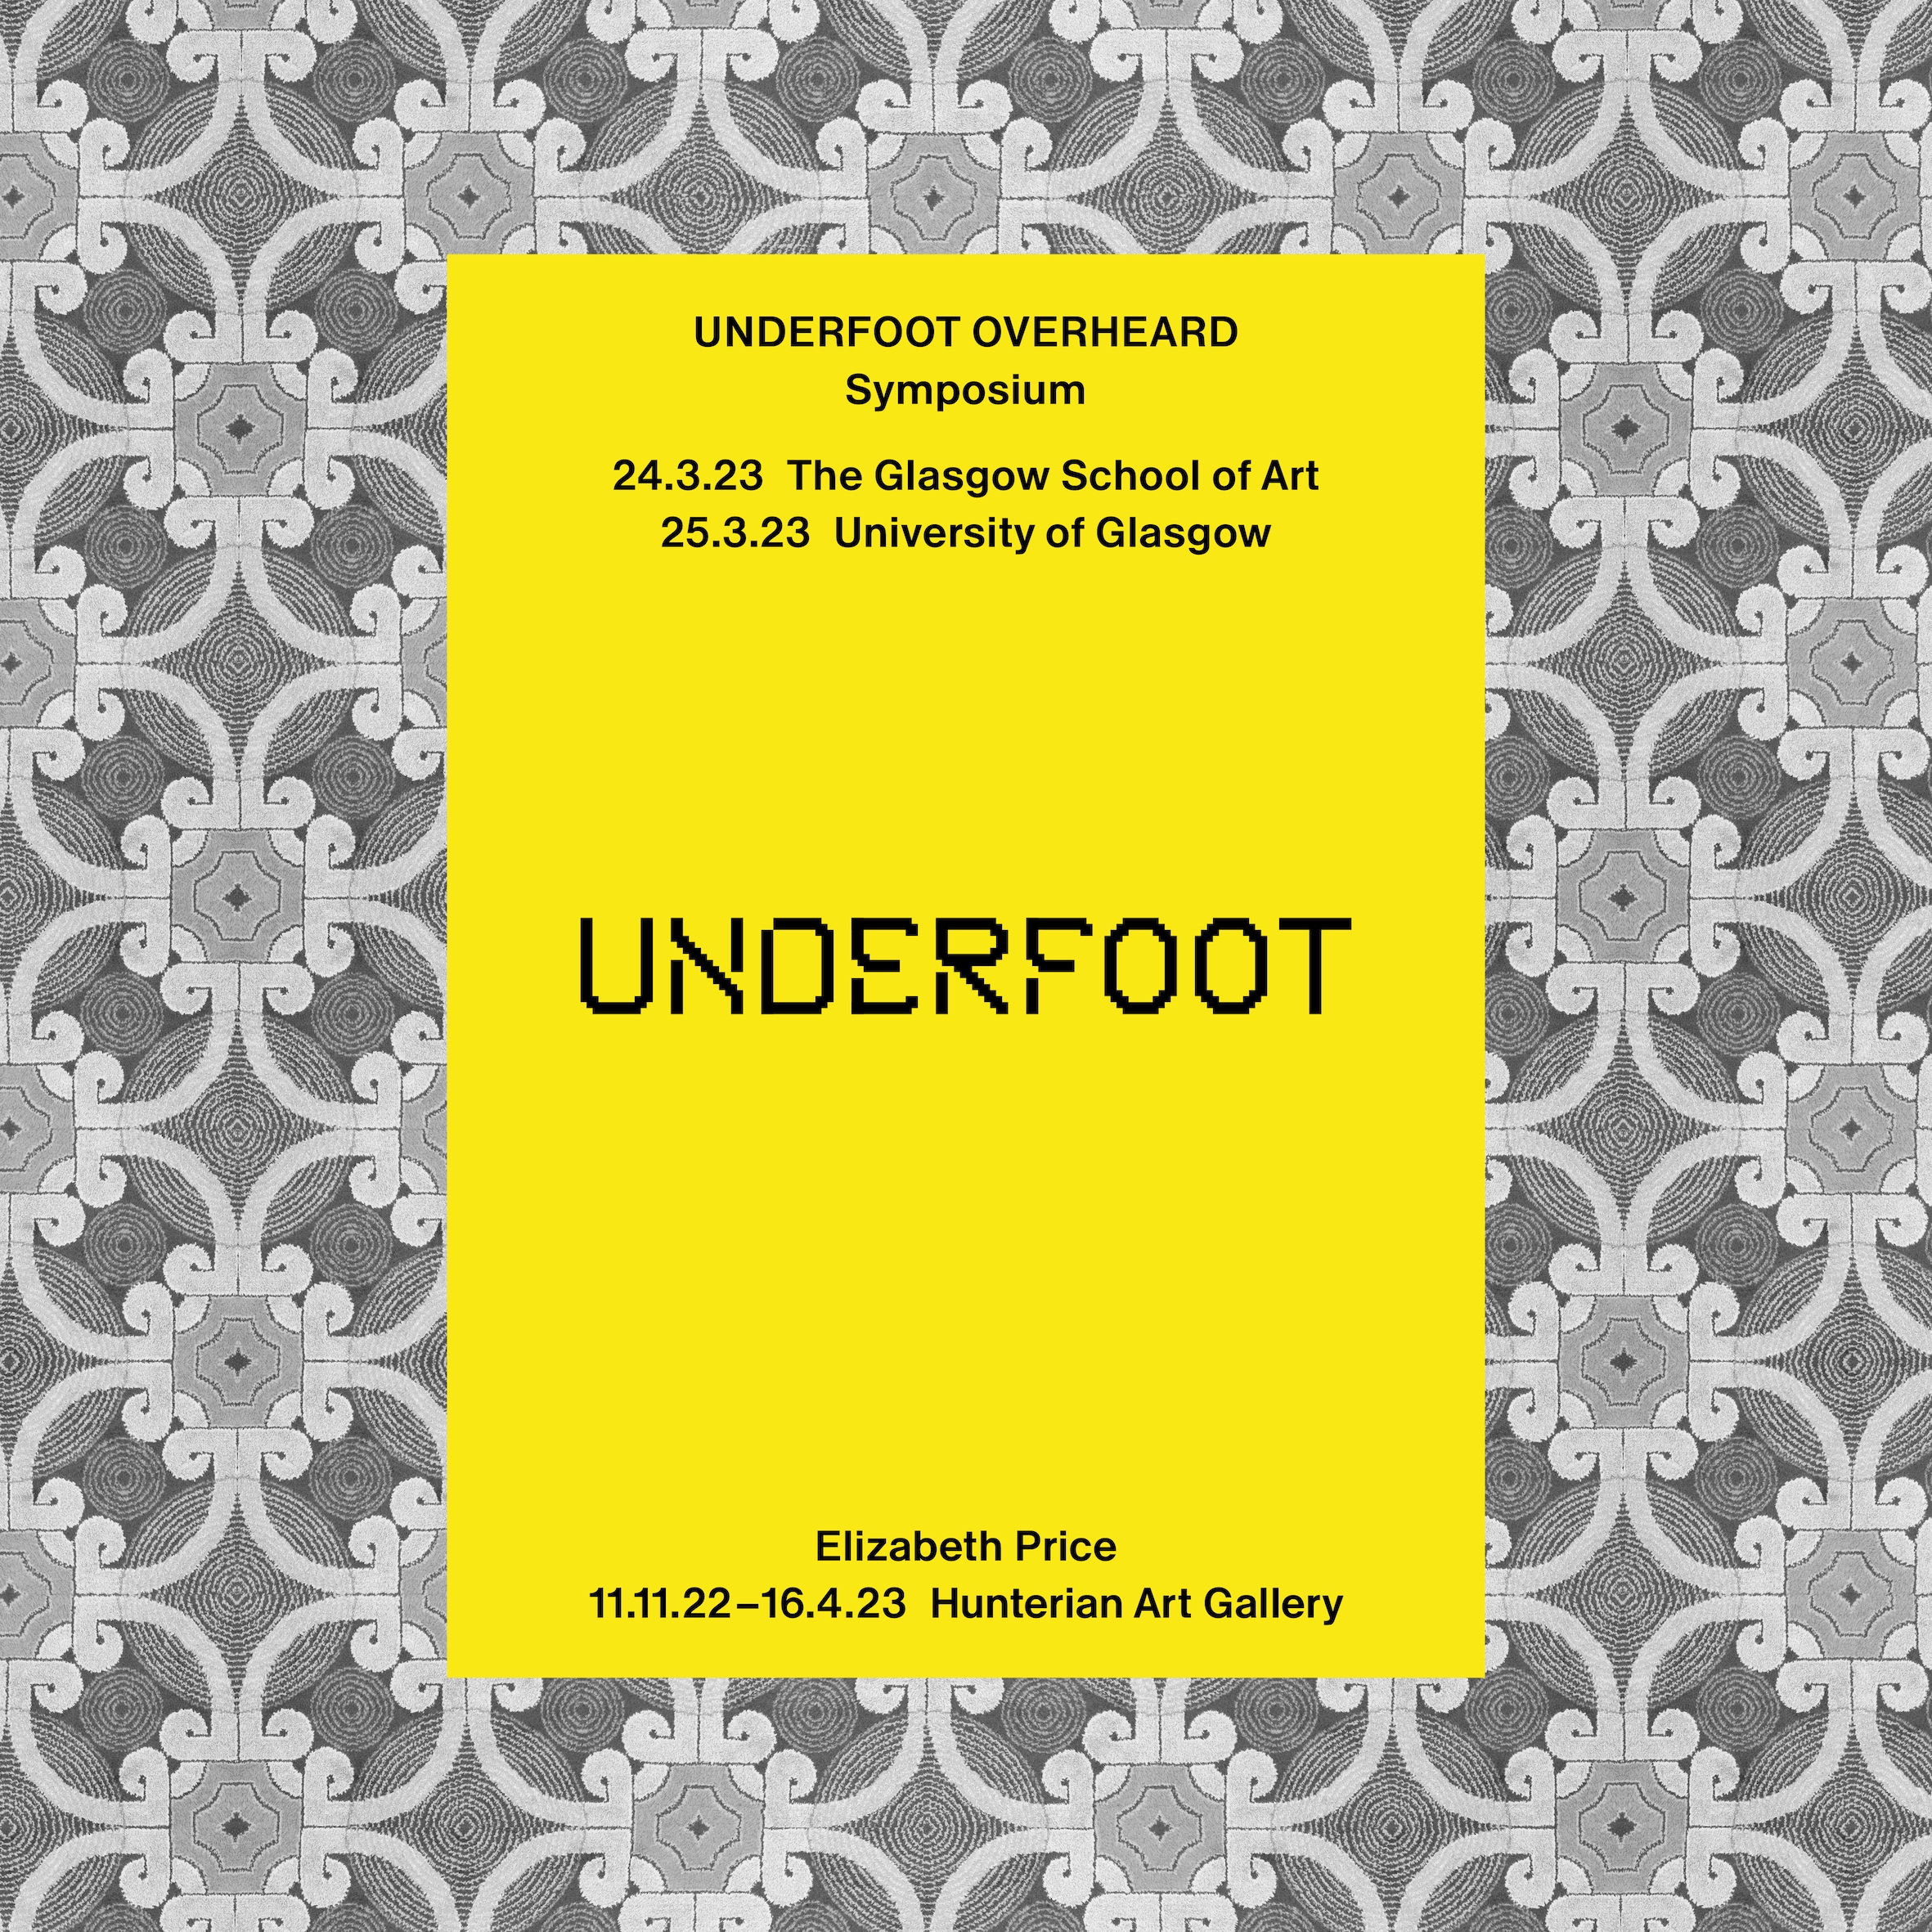 Underfoot Instagram Symposium Copy